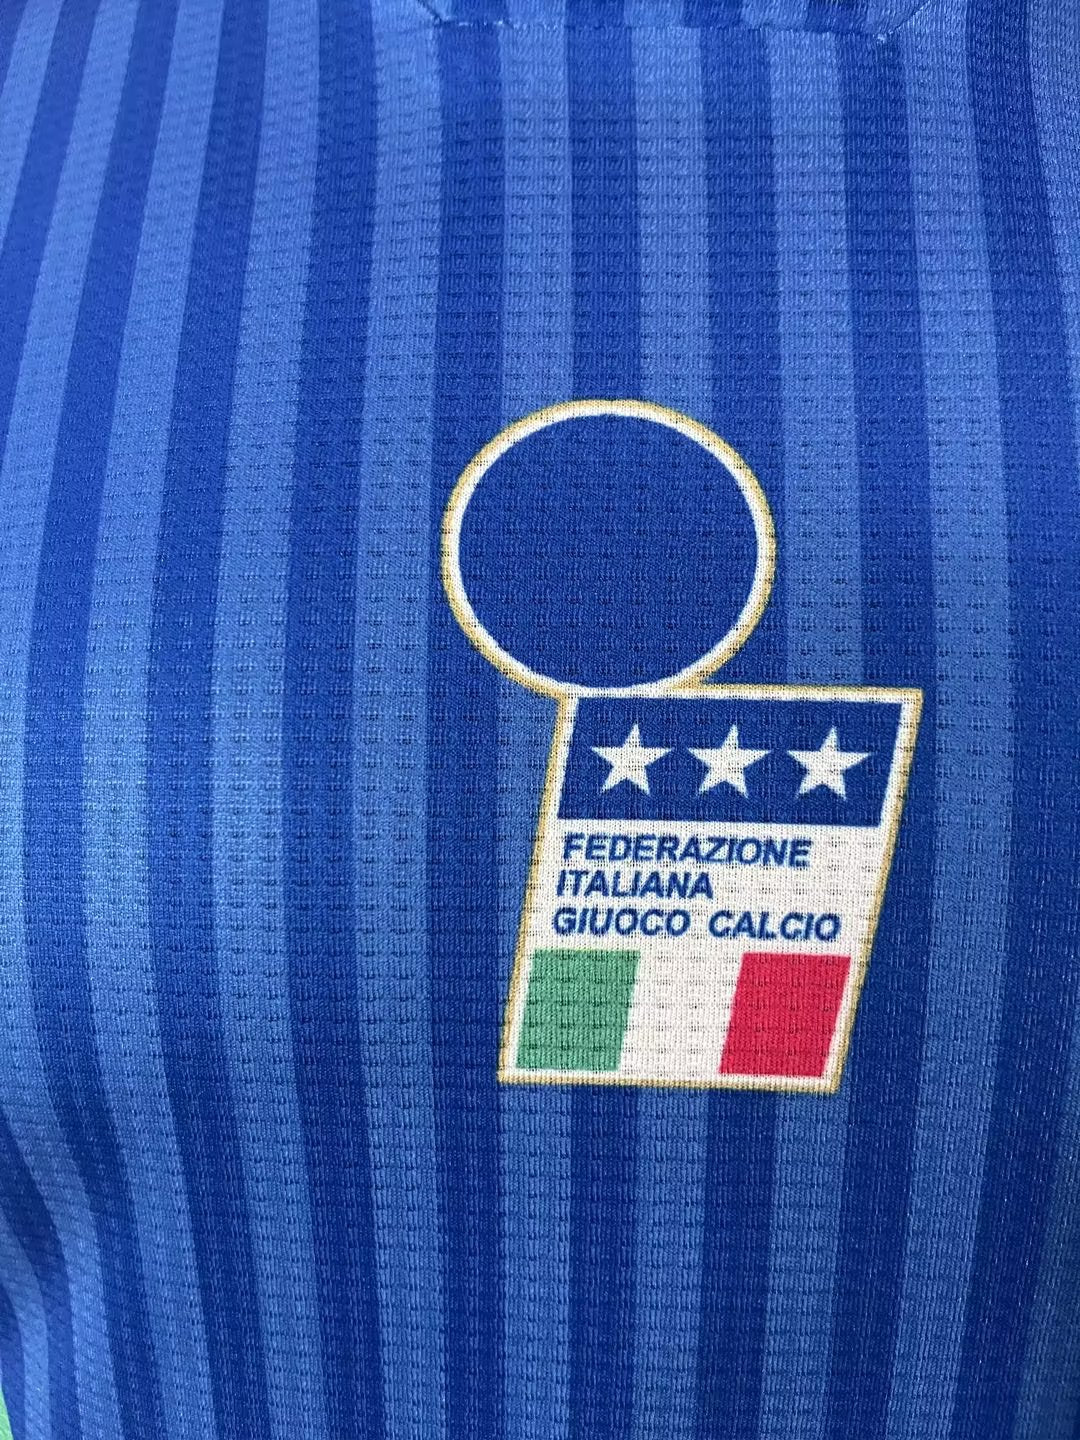 Italy National Team Soccer Retro ‘Icon Edition’ Authentic Adidas Azzuri Shirt Jersey - Blue